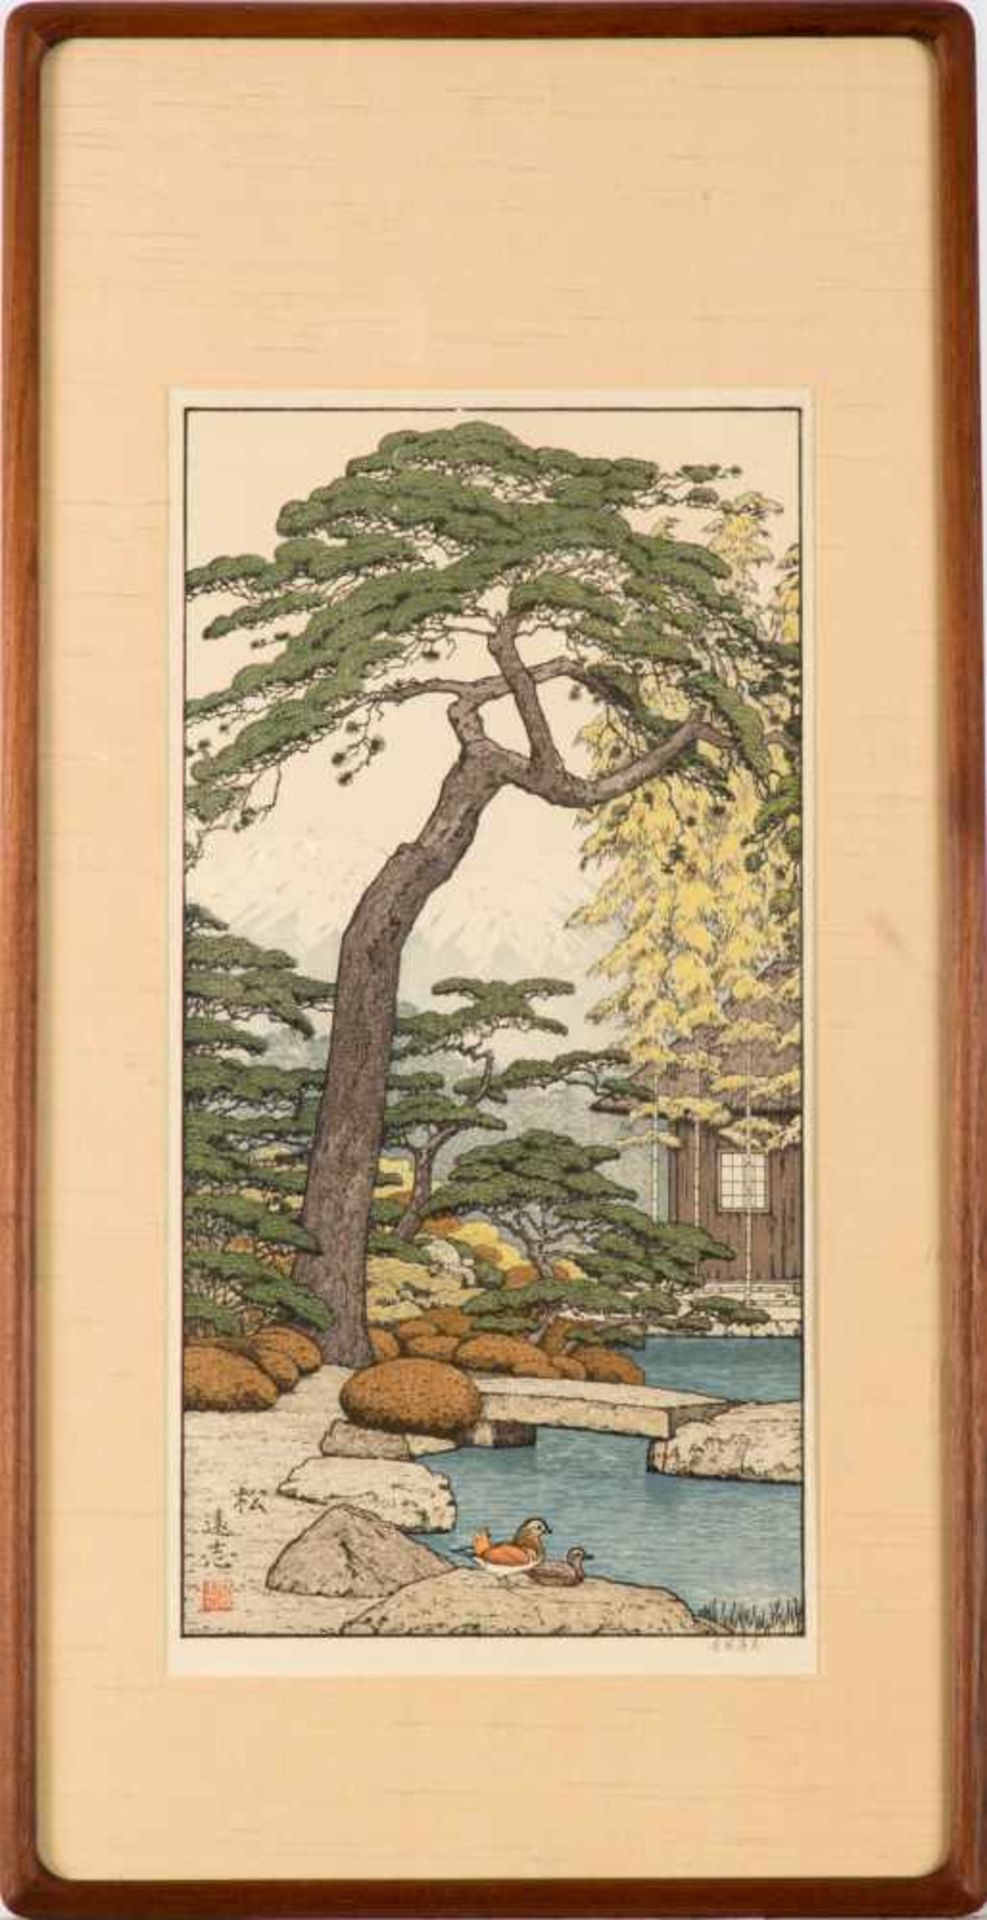 Yoshida, Toshi(Tokio 1911-1995)Holzschnitt "Pine Tree of the Friendly Garden", 51 x 25 cm, unter